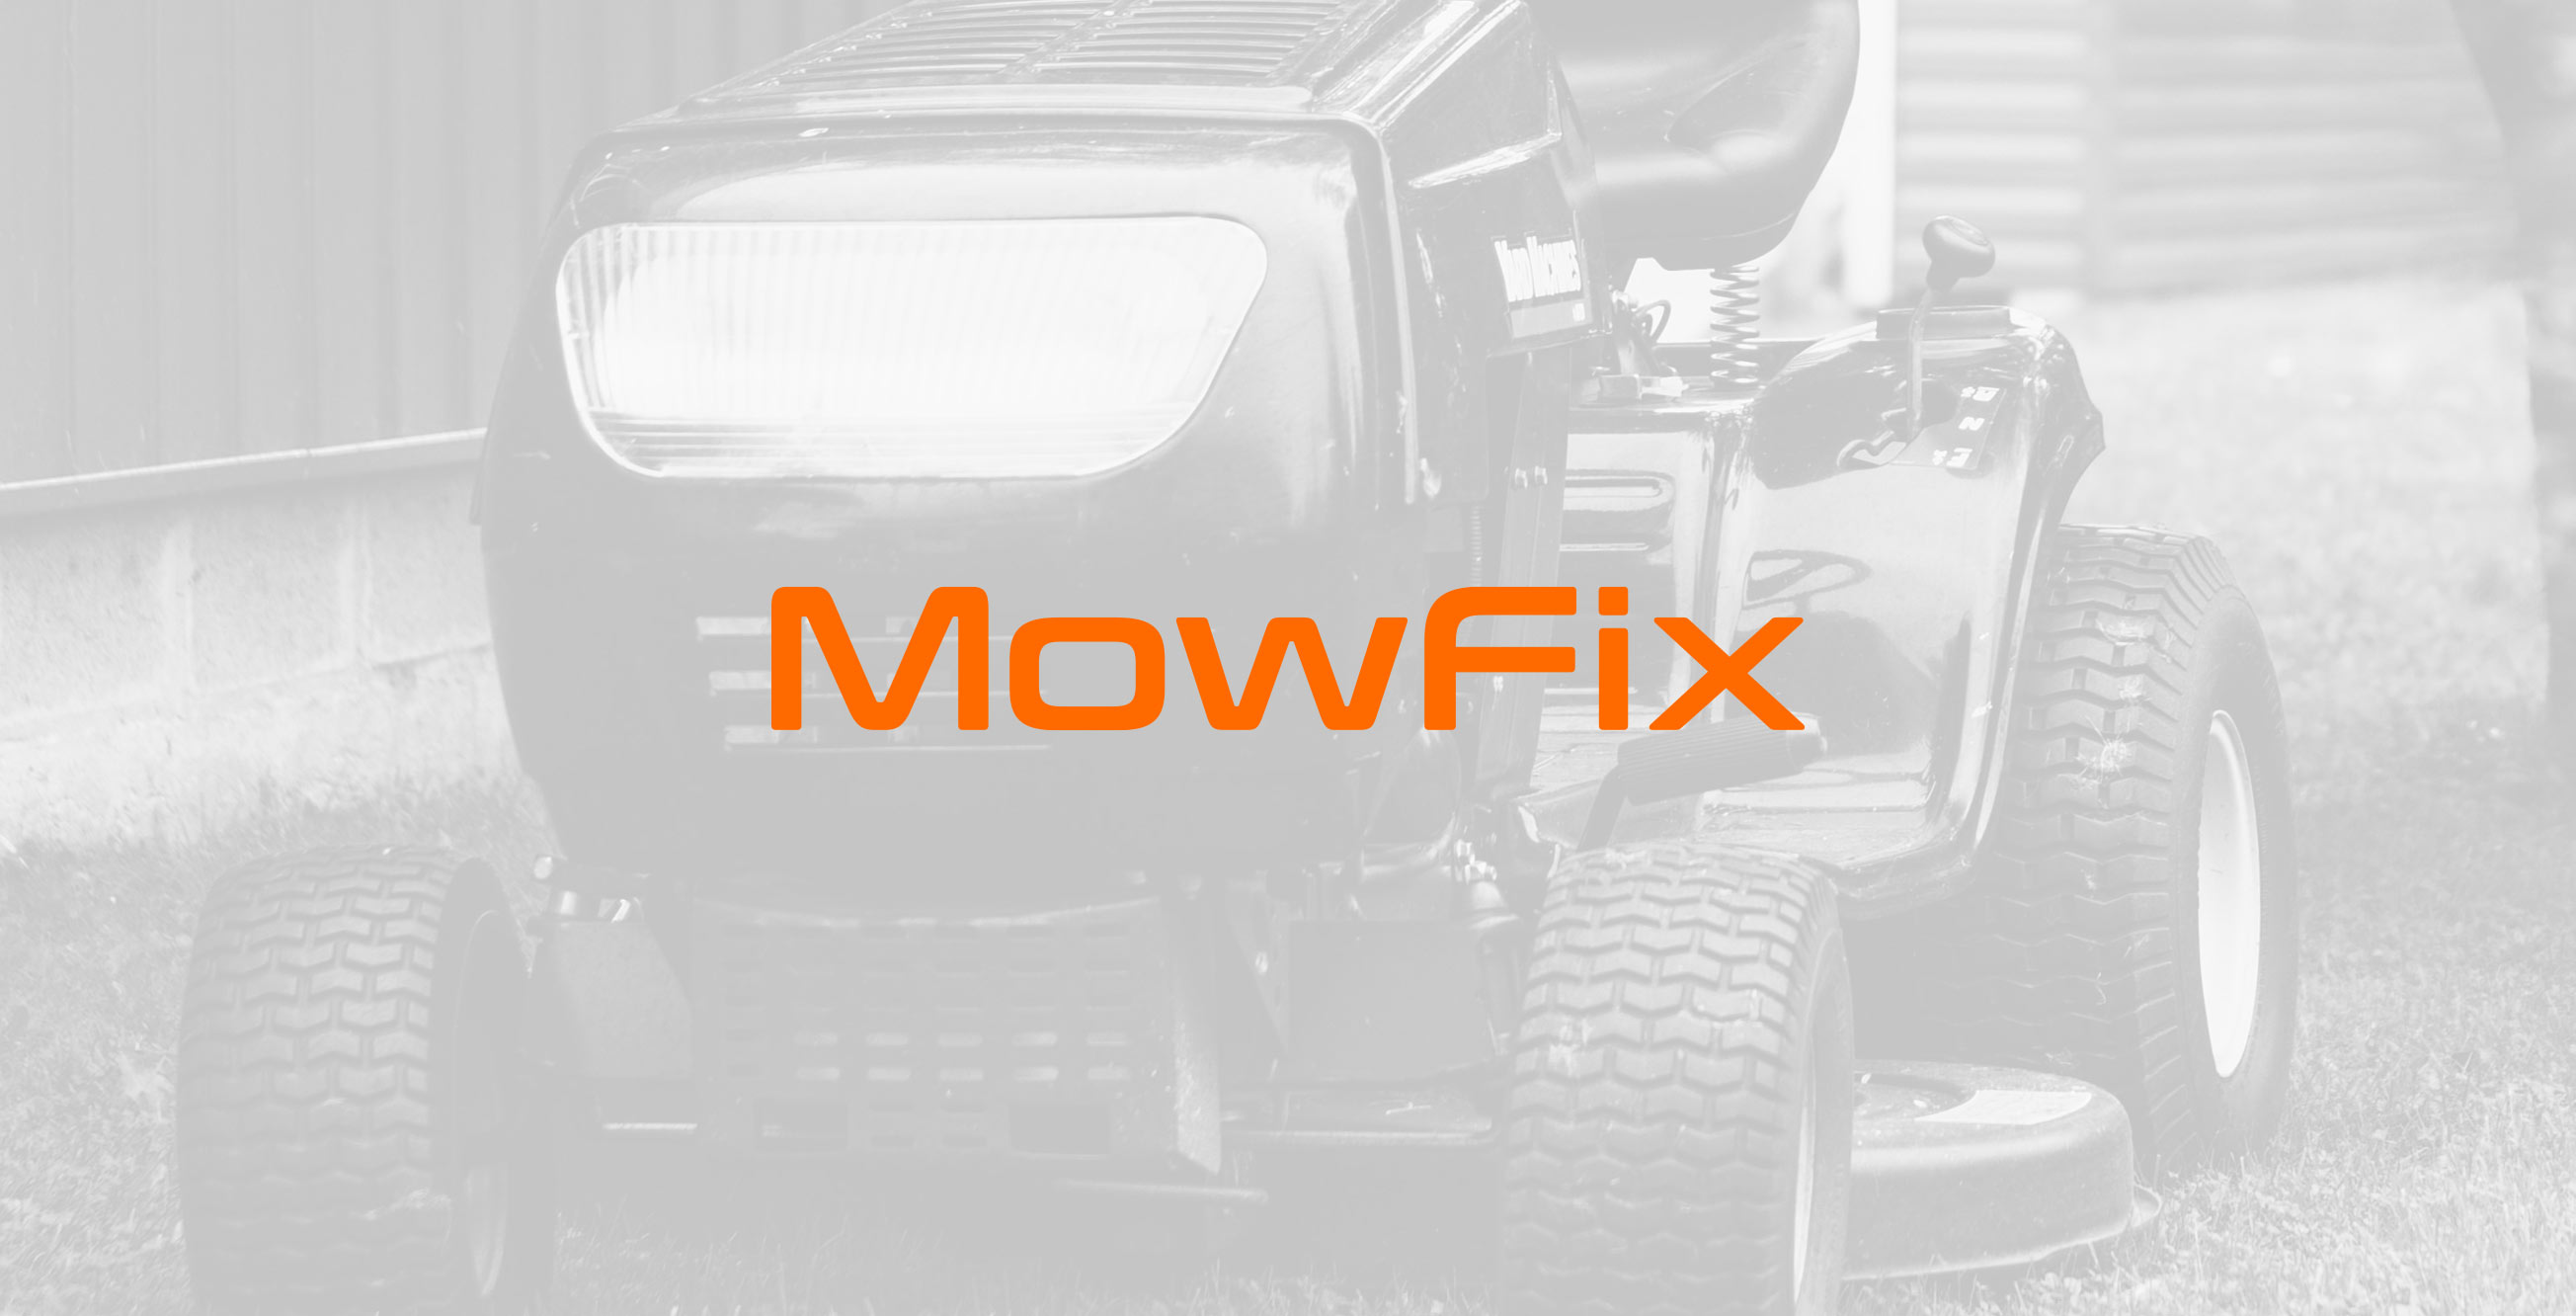 Mowfix Wordmark Logo Design Superimposed Over Image of Ride-On Lawnmower, by Karbon Branding